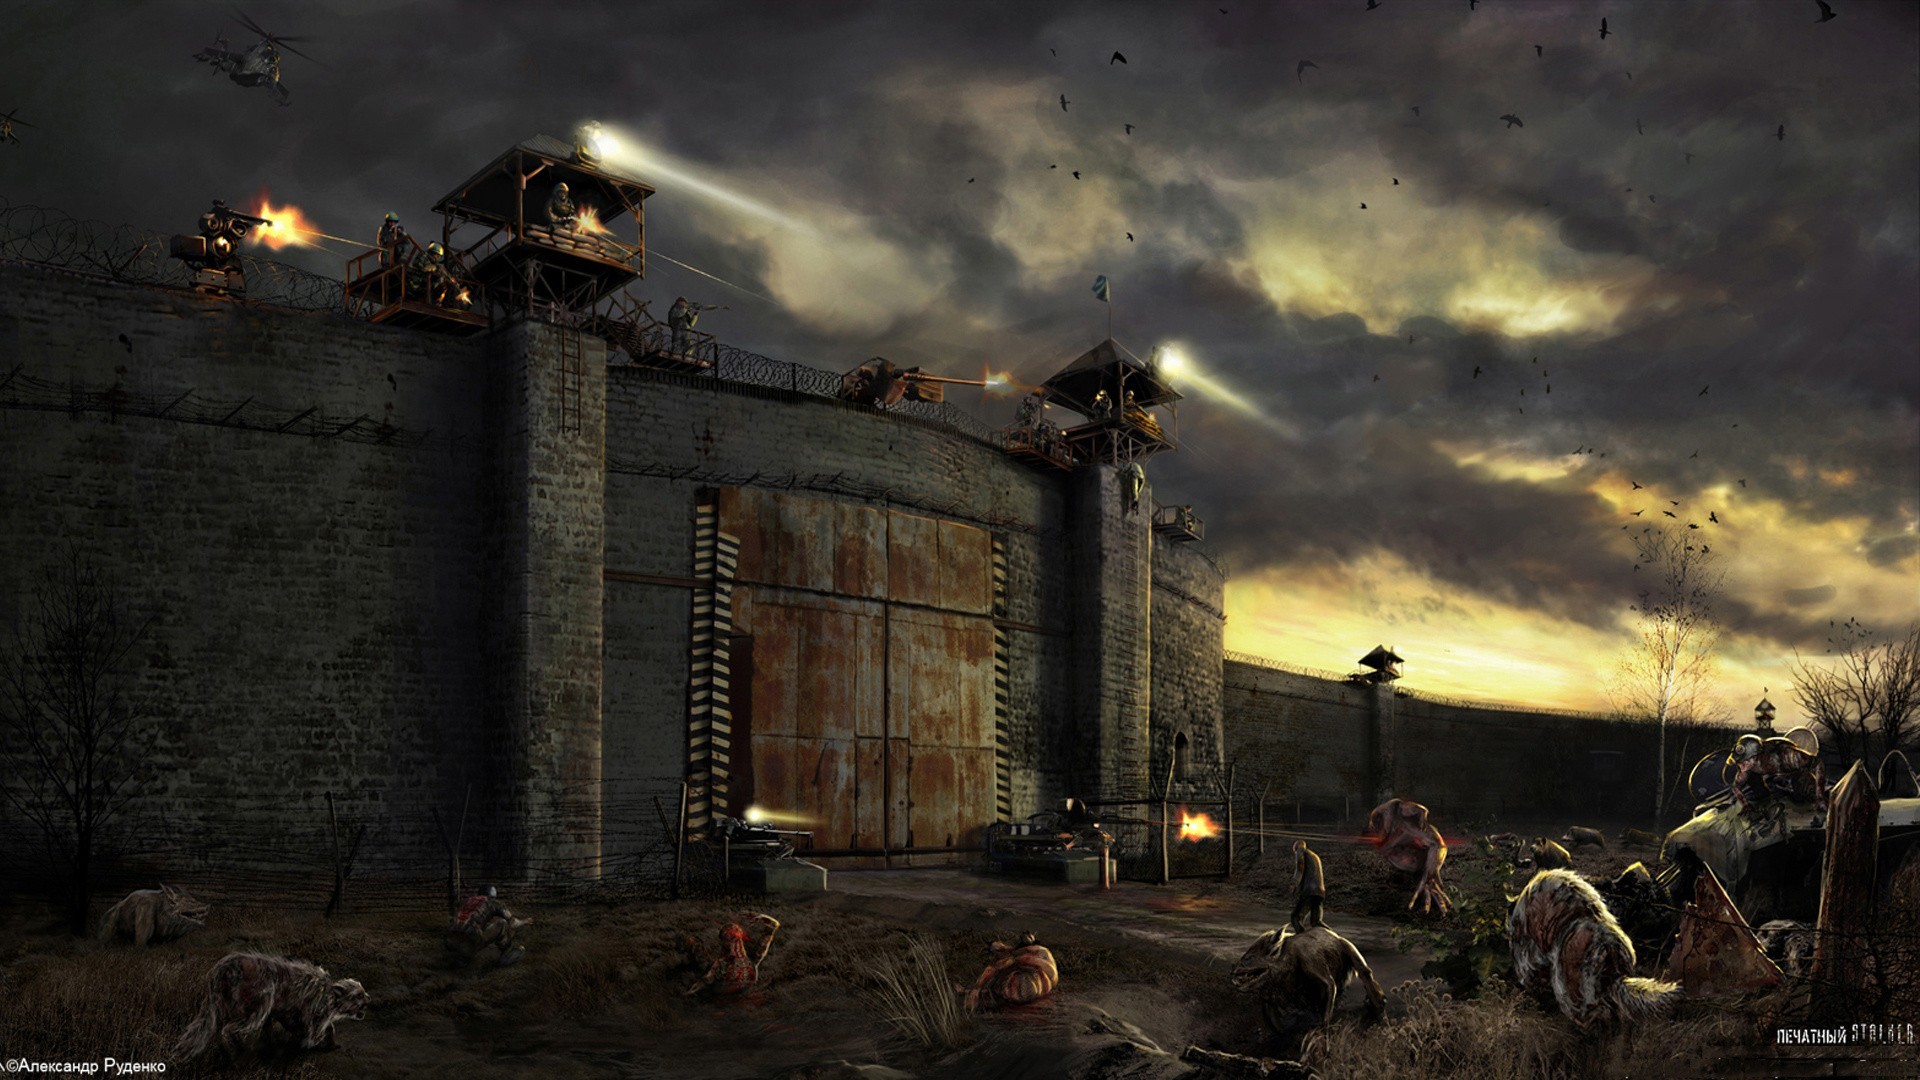 1920x1080 zombie apocalypse wallpaper - Google Search